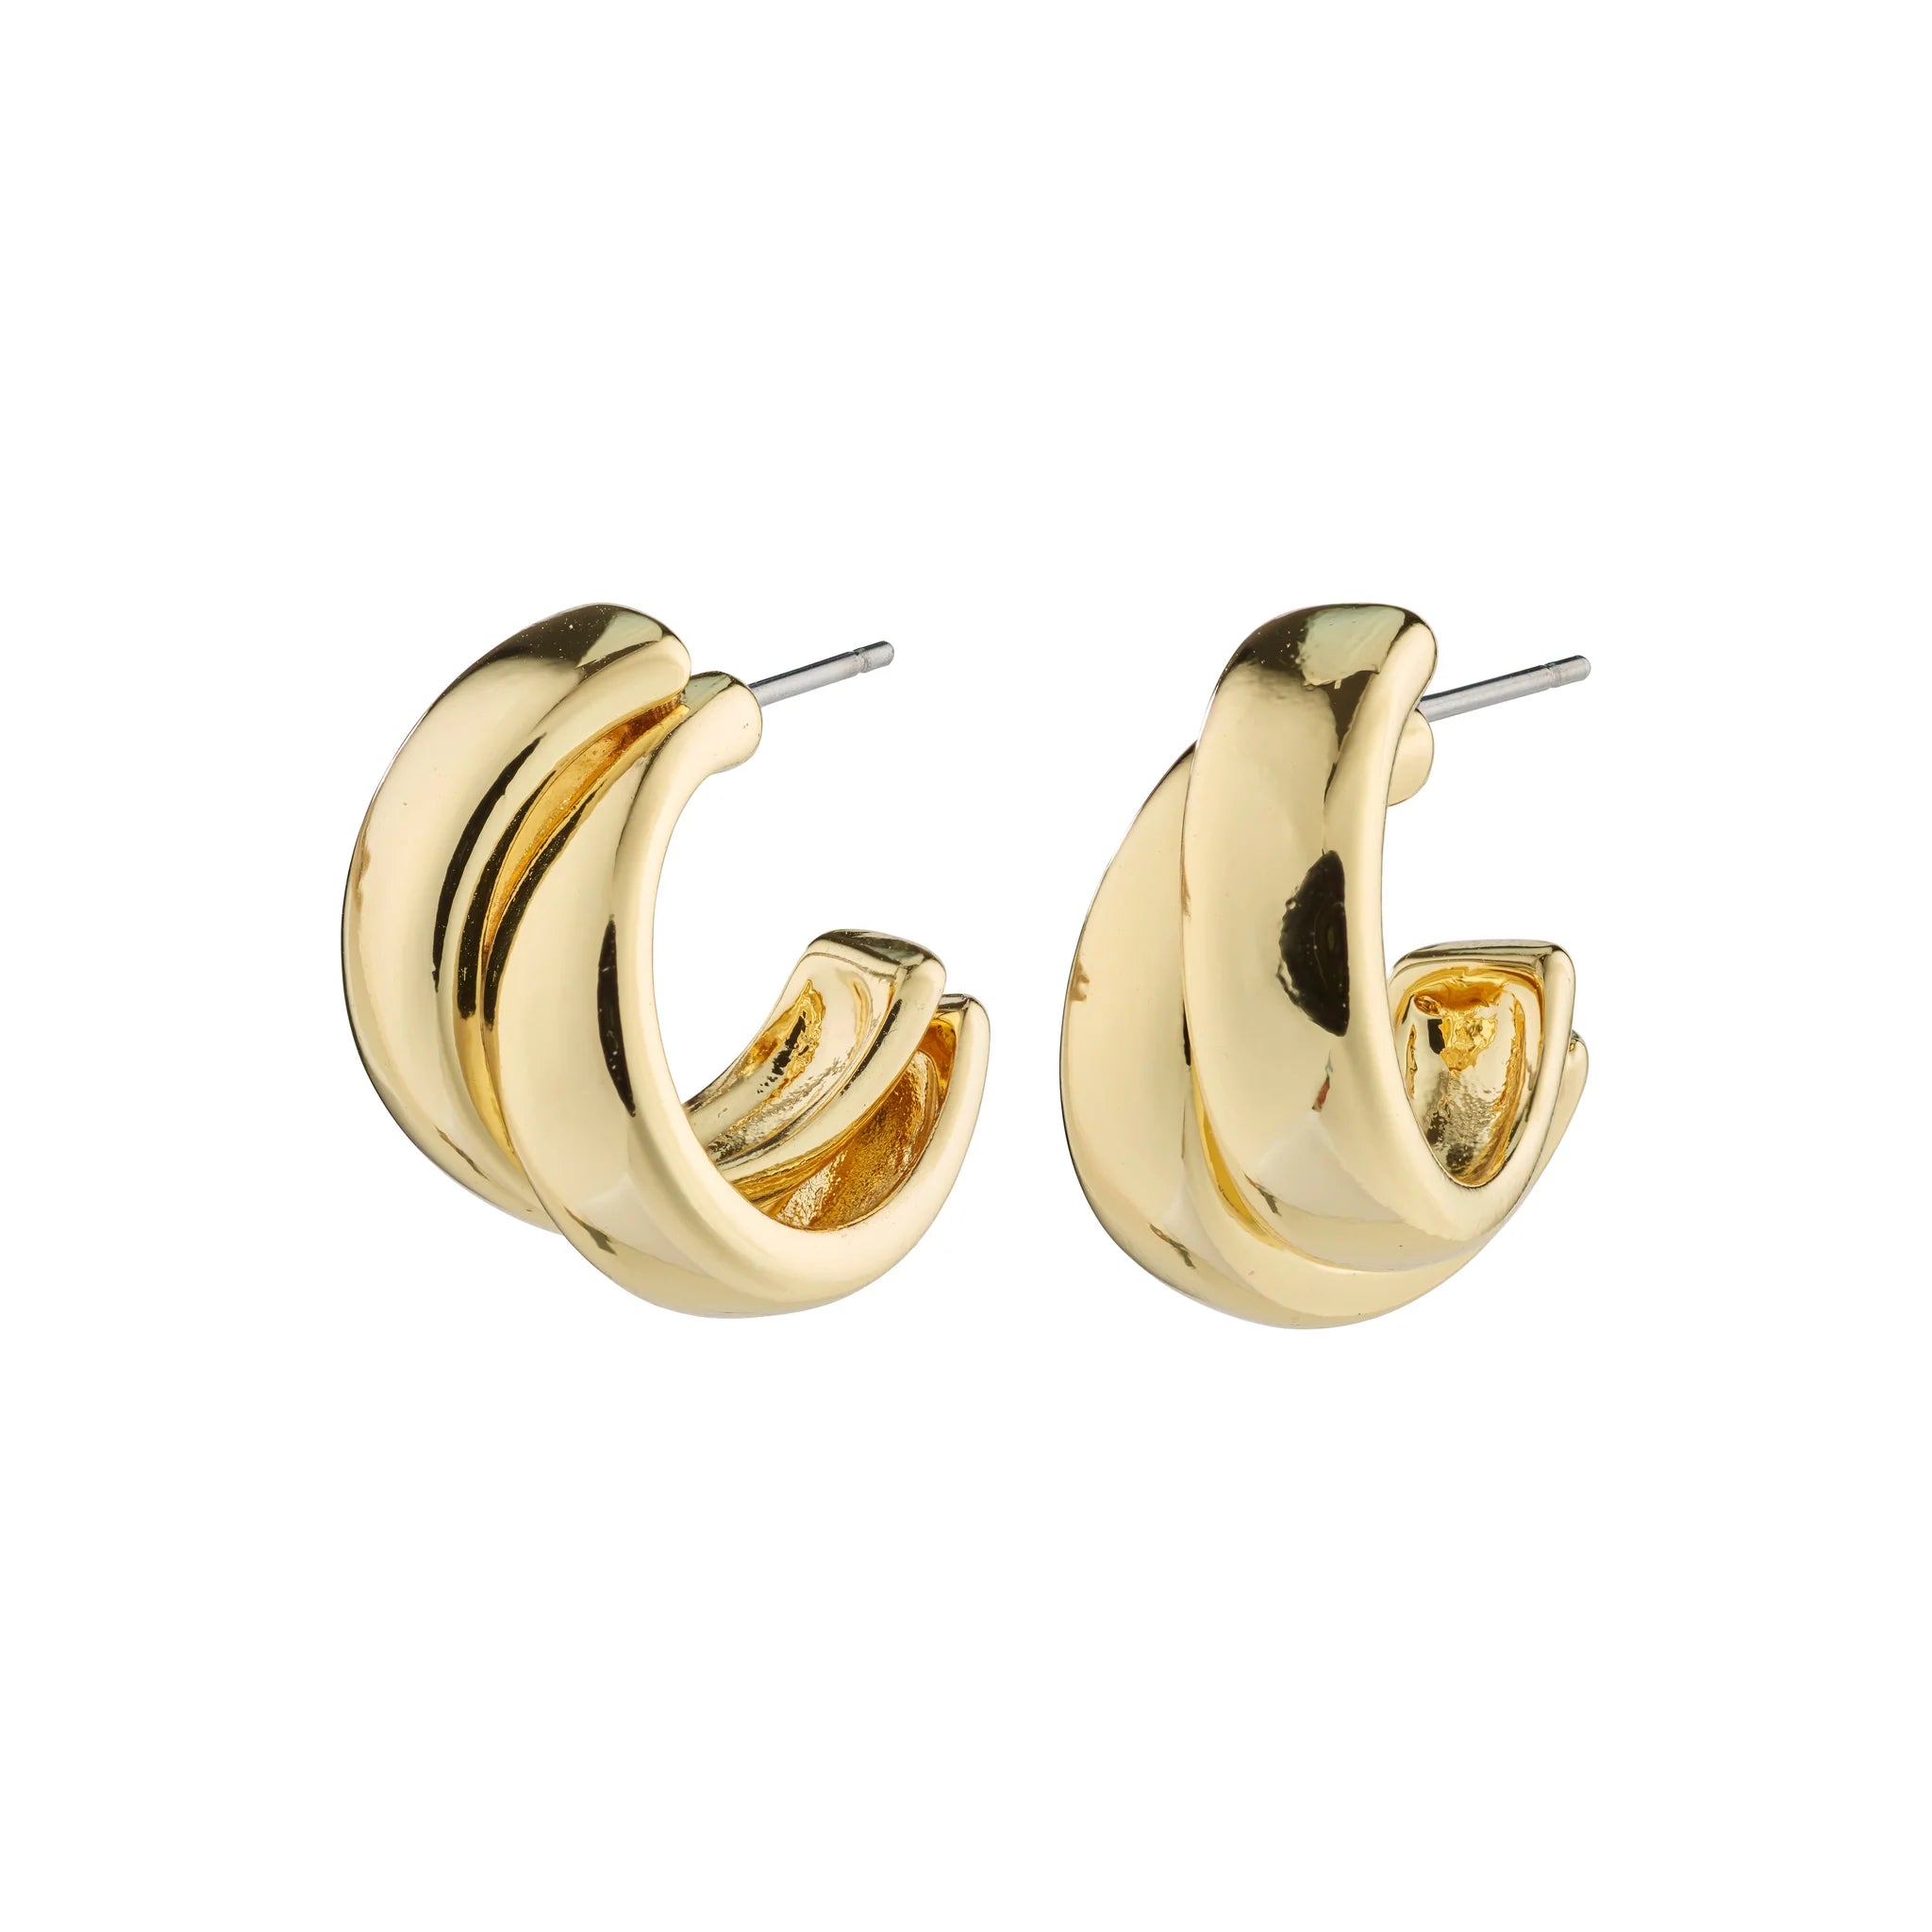 ORIT earrings gold-plated